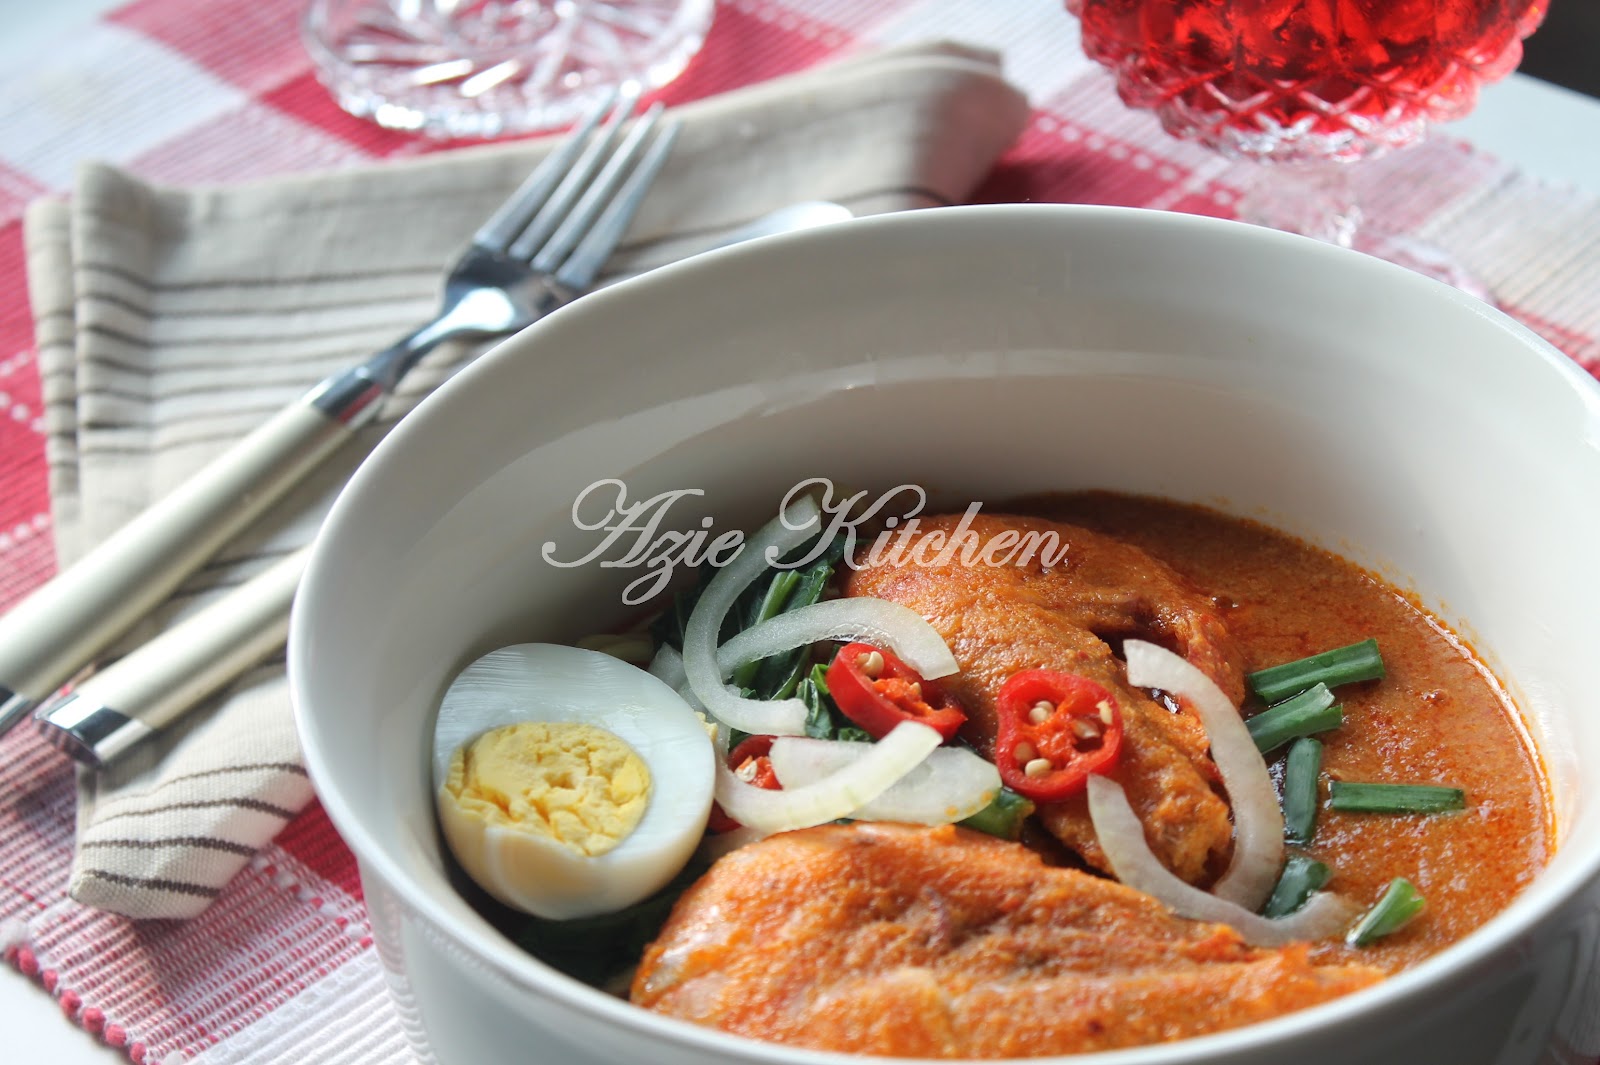 Resepi mee udang azie kitchen